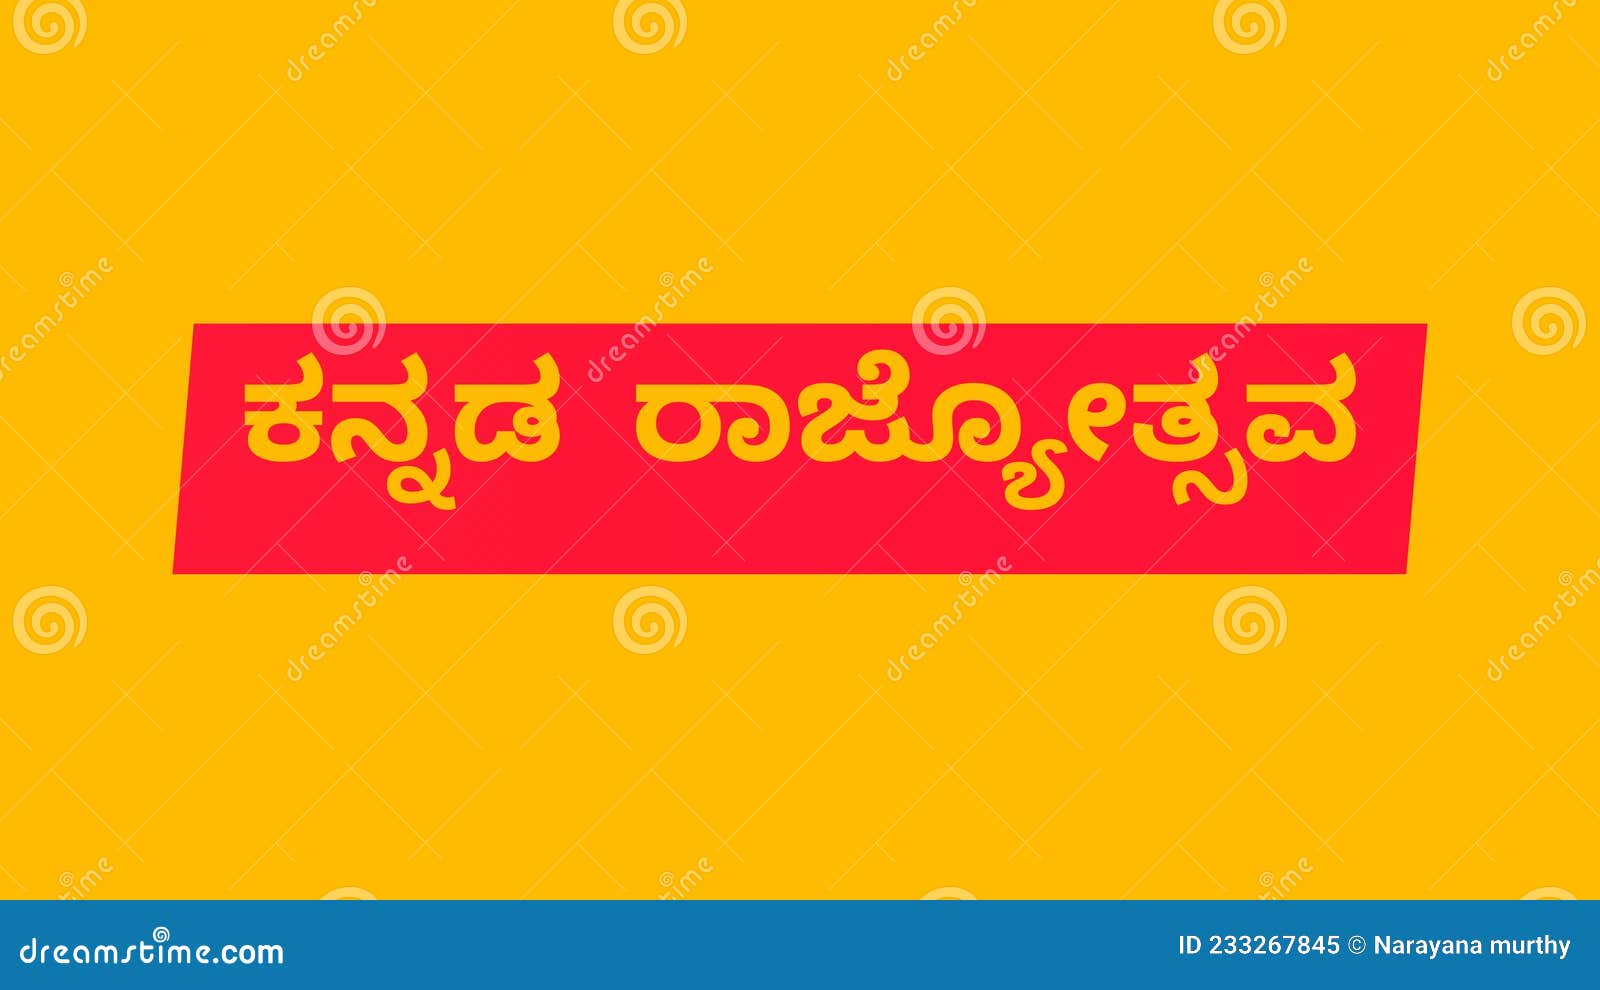 Kannada Rajyotsava Image. Wallpaper for Desktop Computers Stock ...